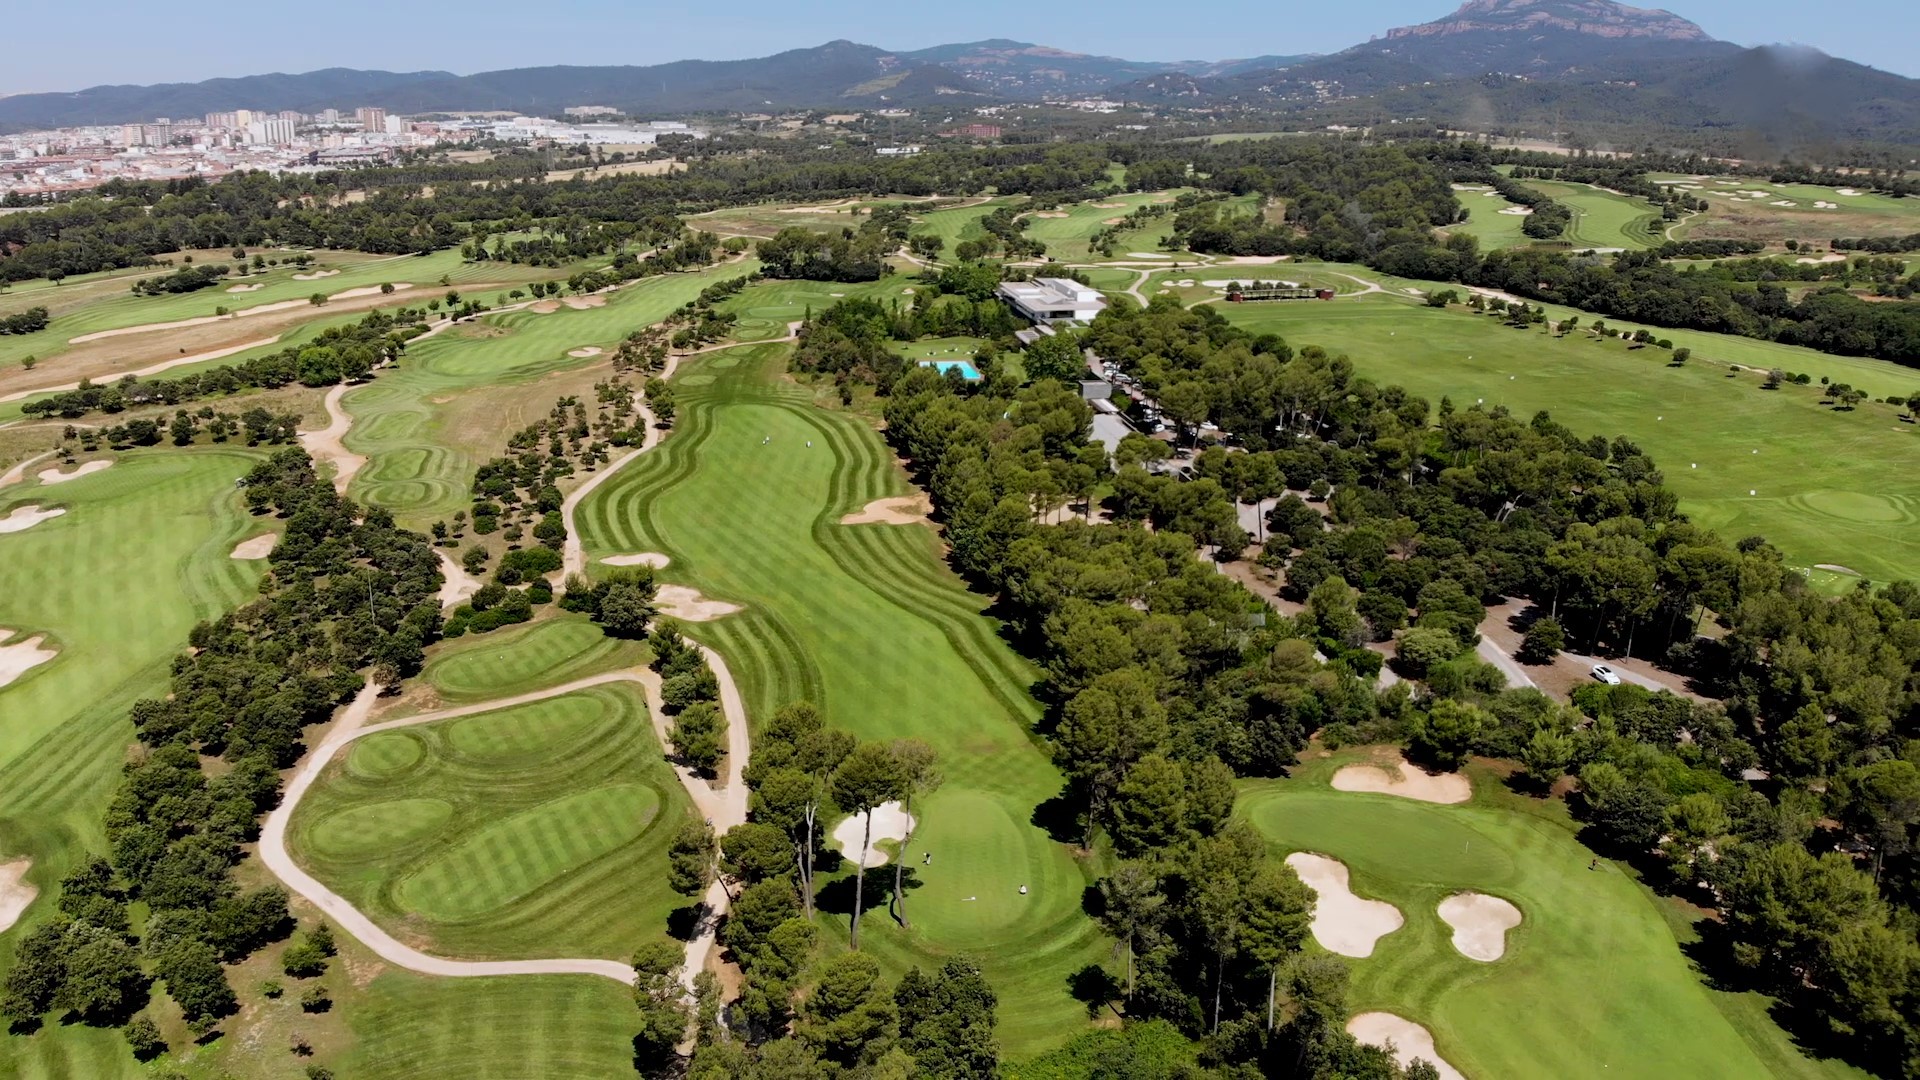 Real Club de Golf El Prat aerial view 3